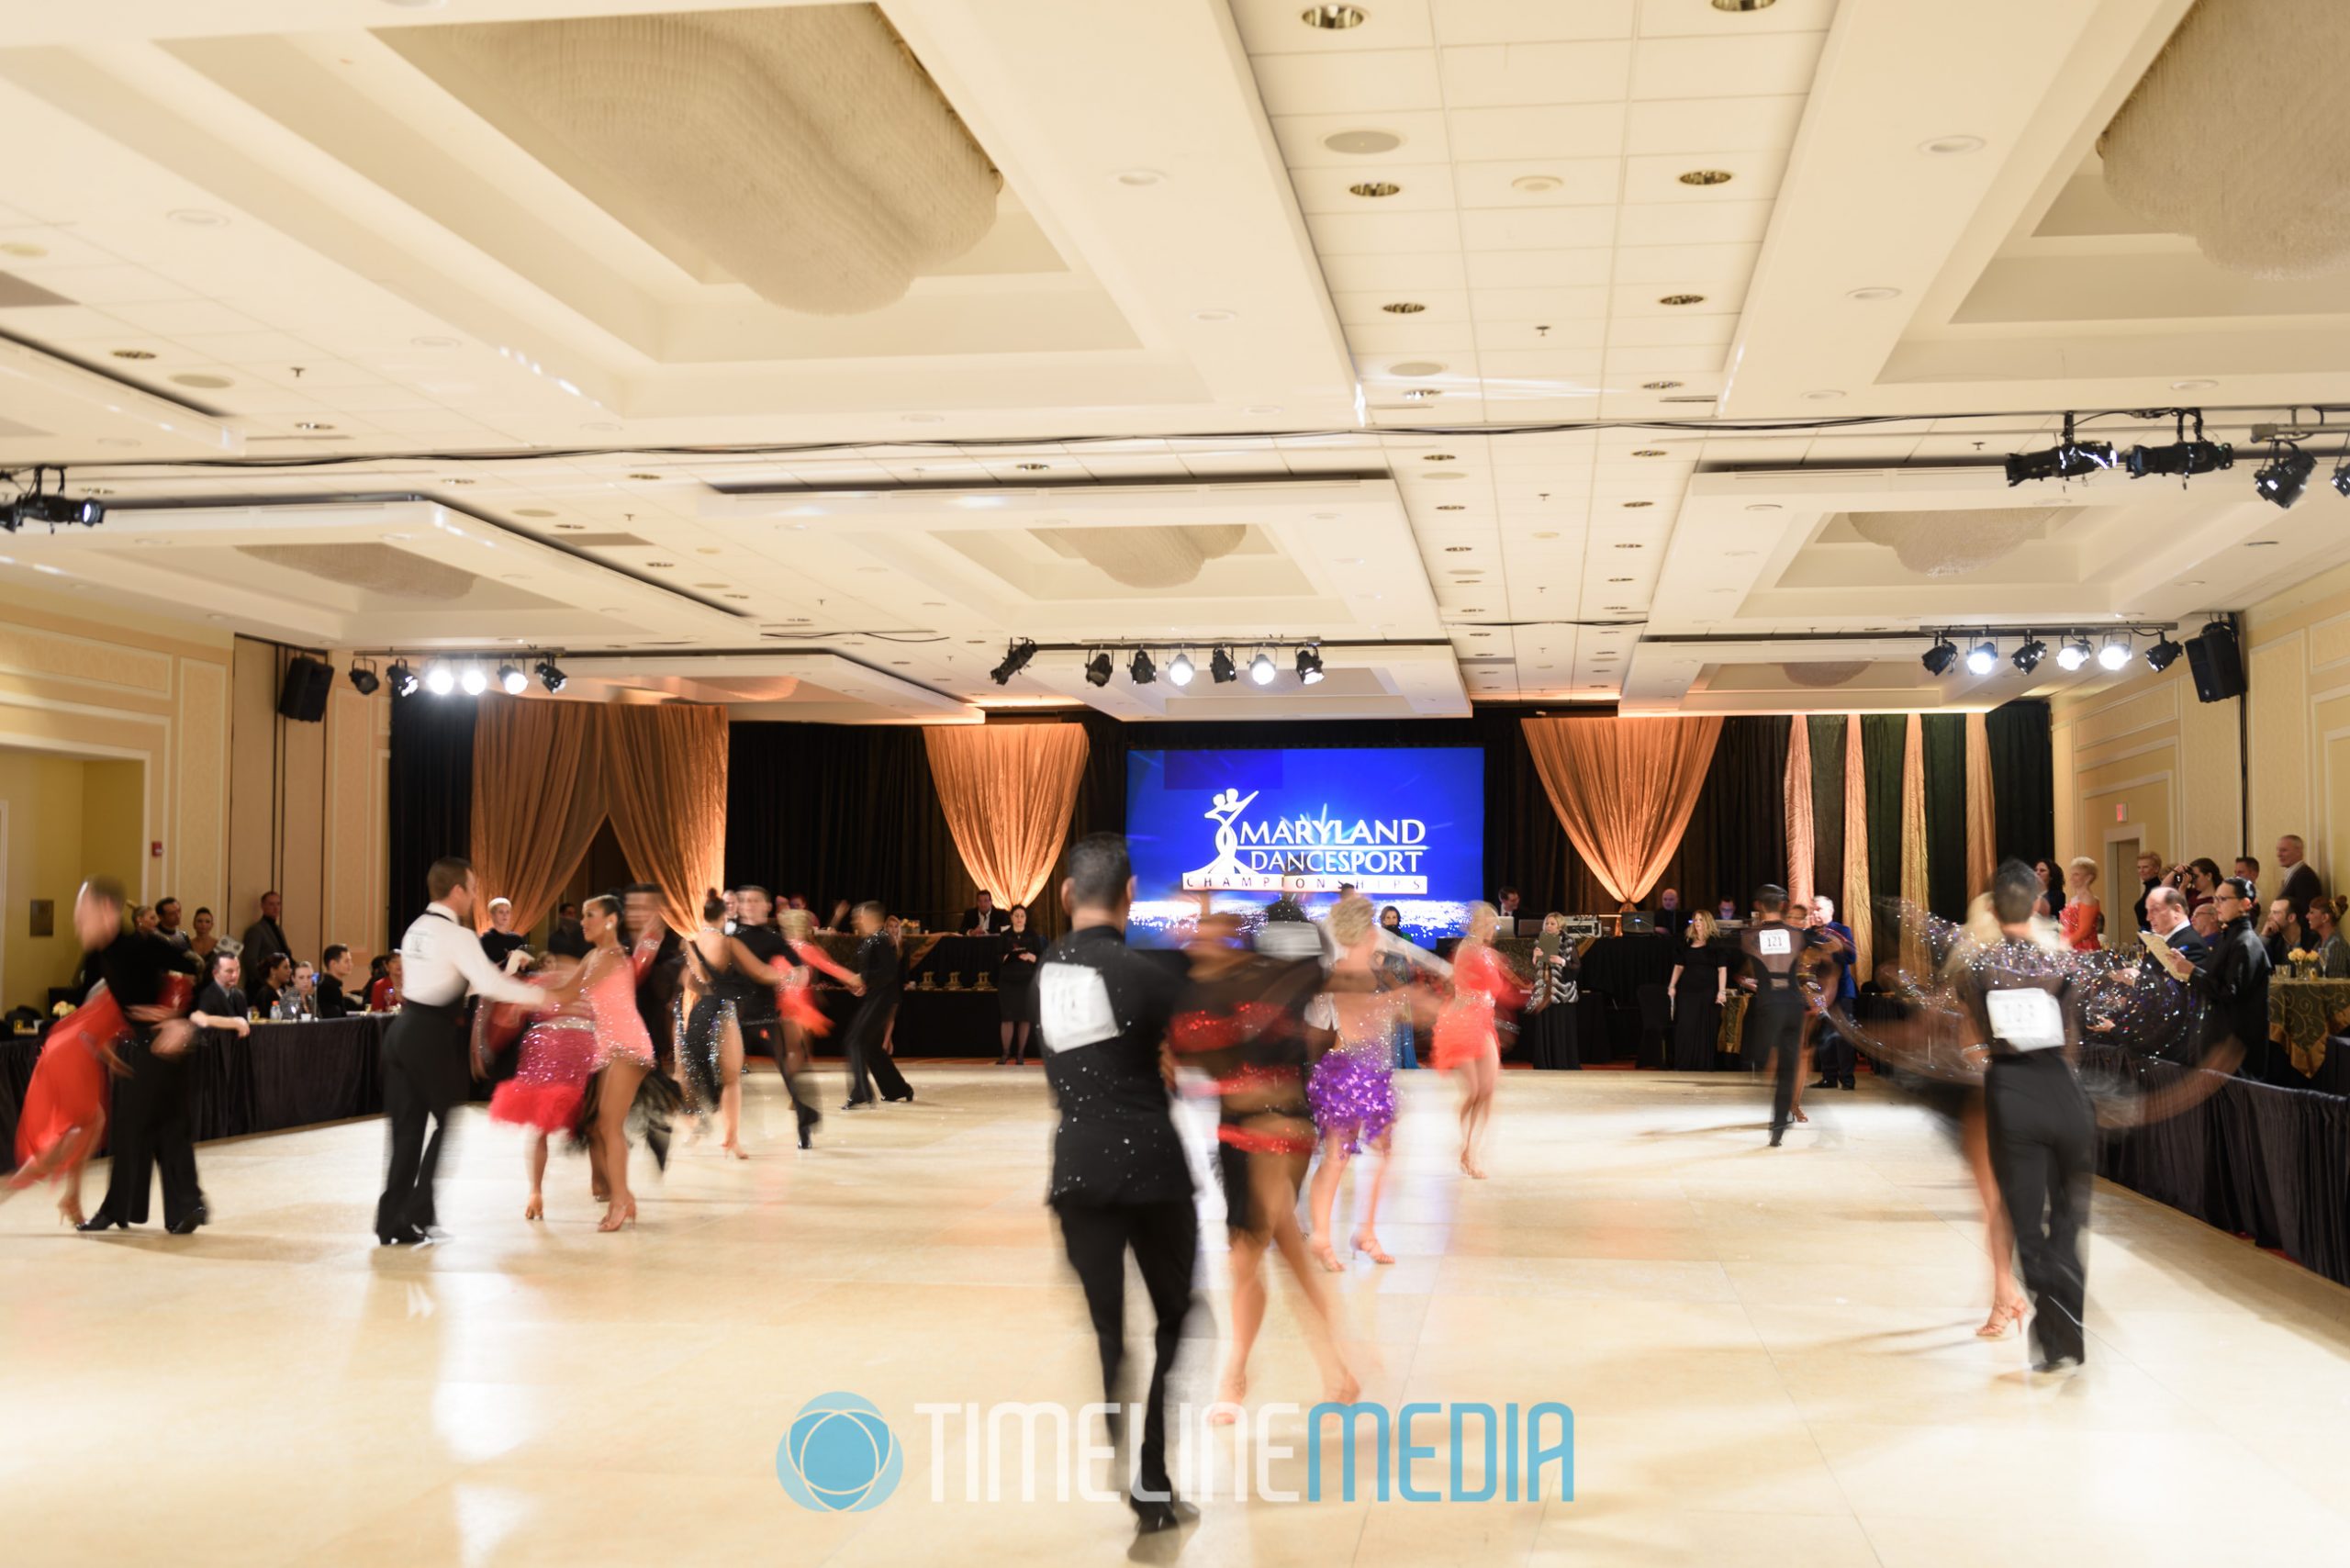 BWI Marriott Ballroom Dance floor ©TimeLine Media